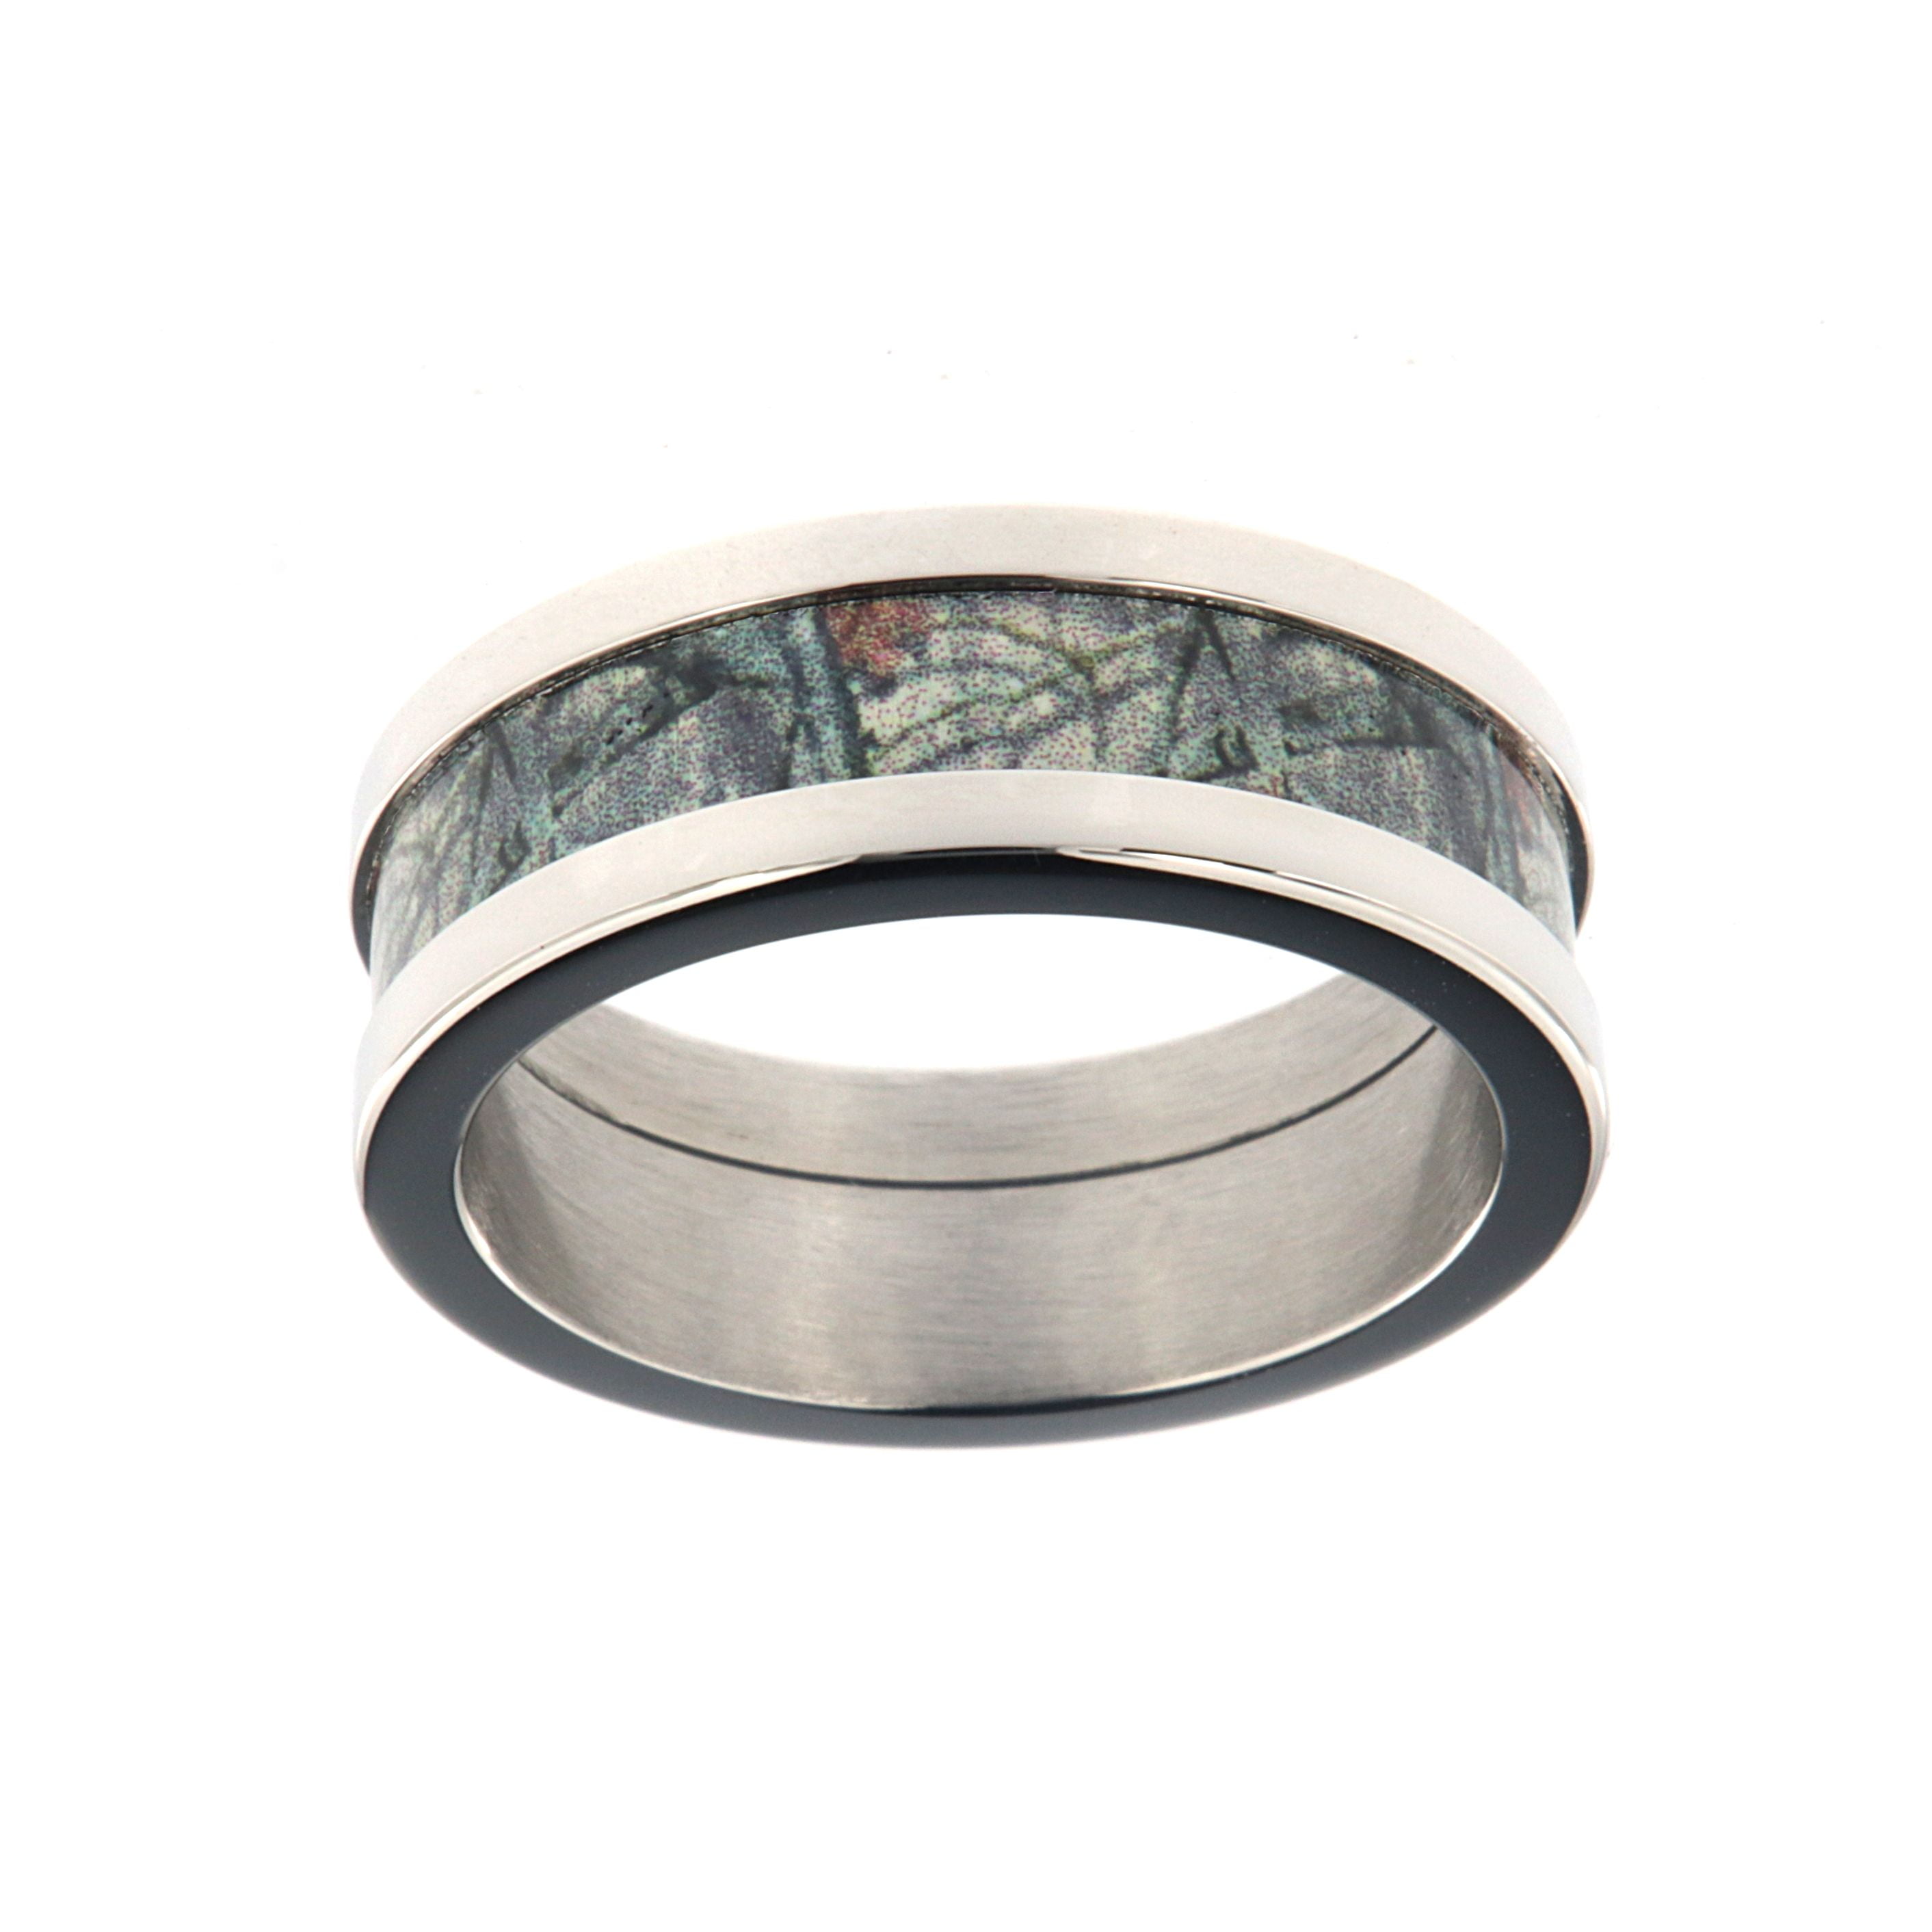 Buy online this Lashbrook Mossy Oak 8mm Camo Inlay Black Zirconium Wedding  Ring Style # 8B15 AWB & Co.